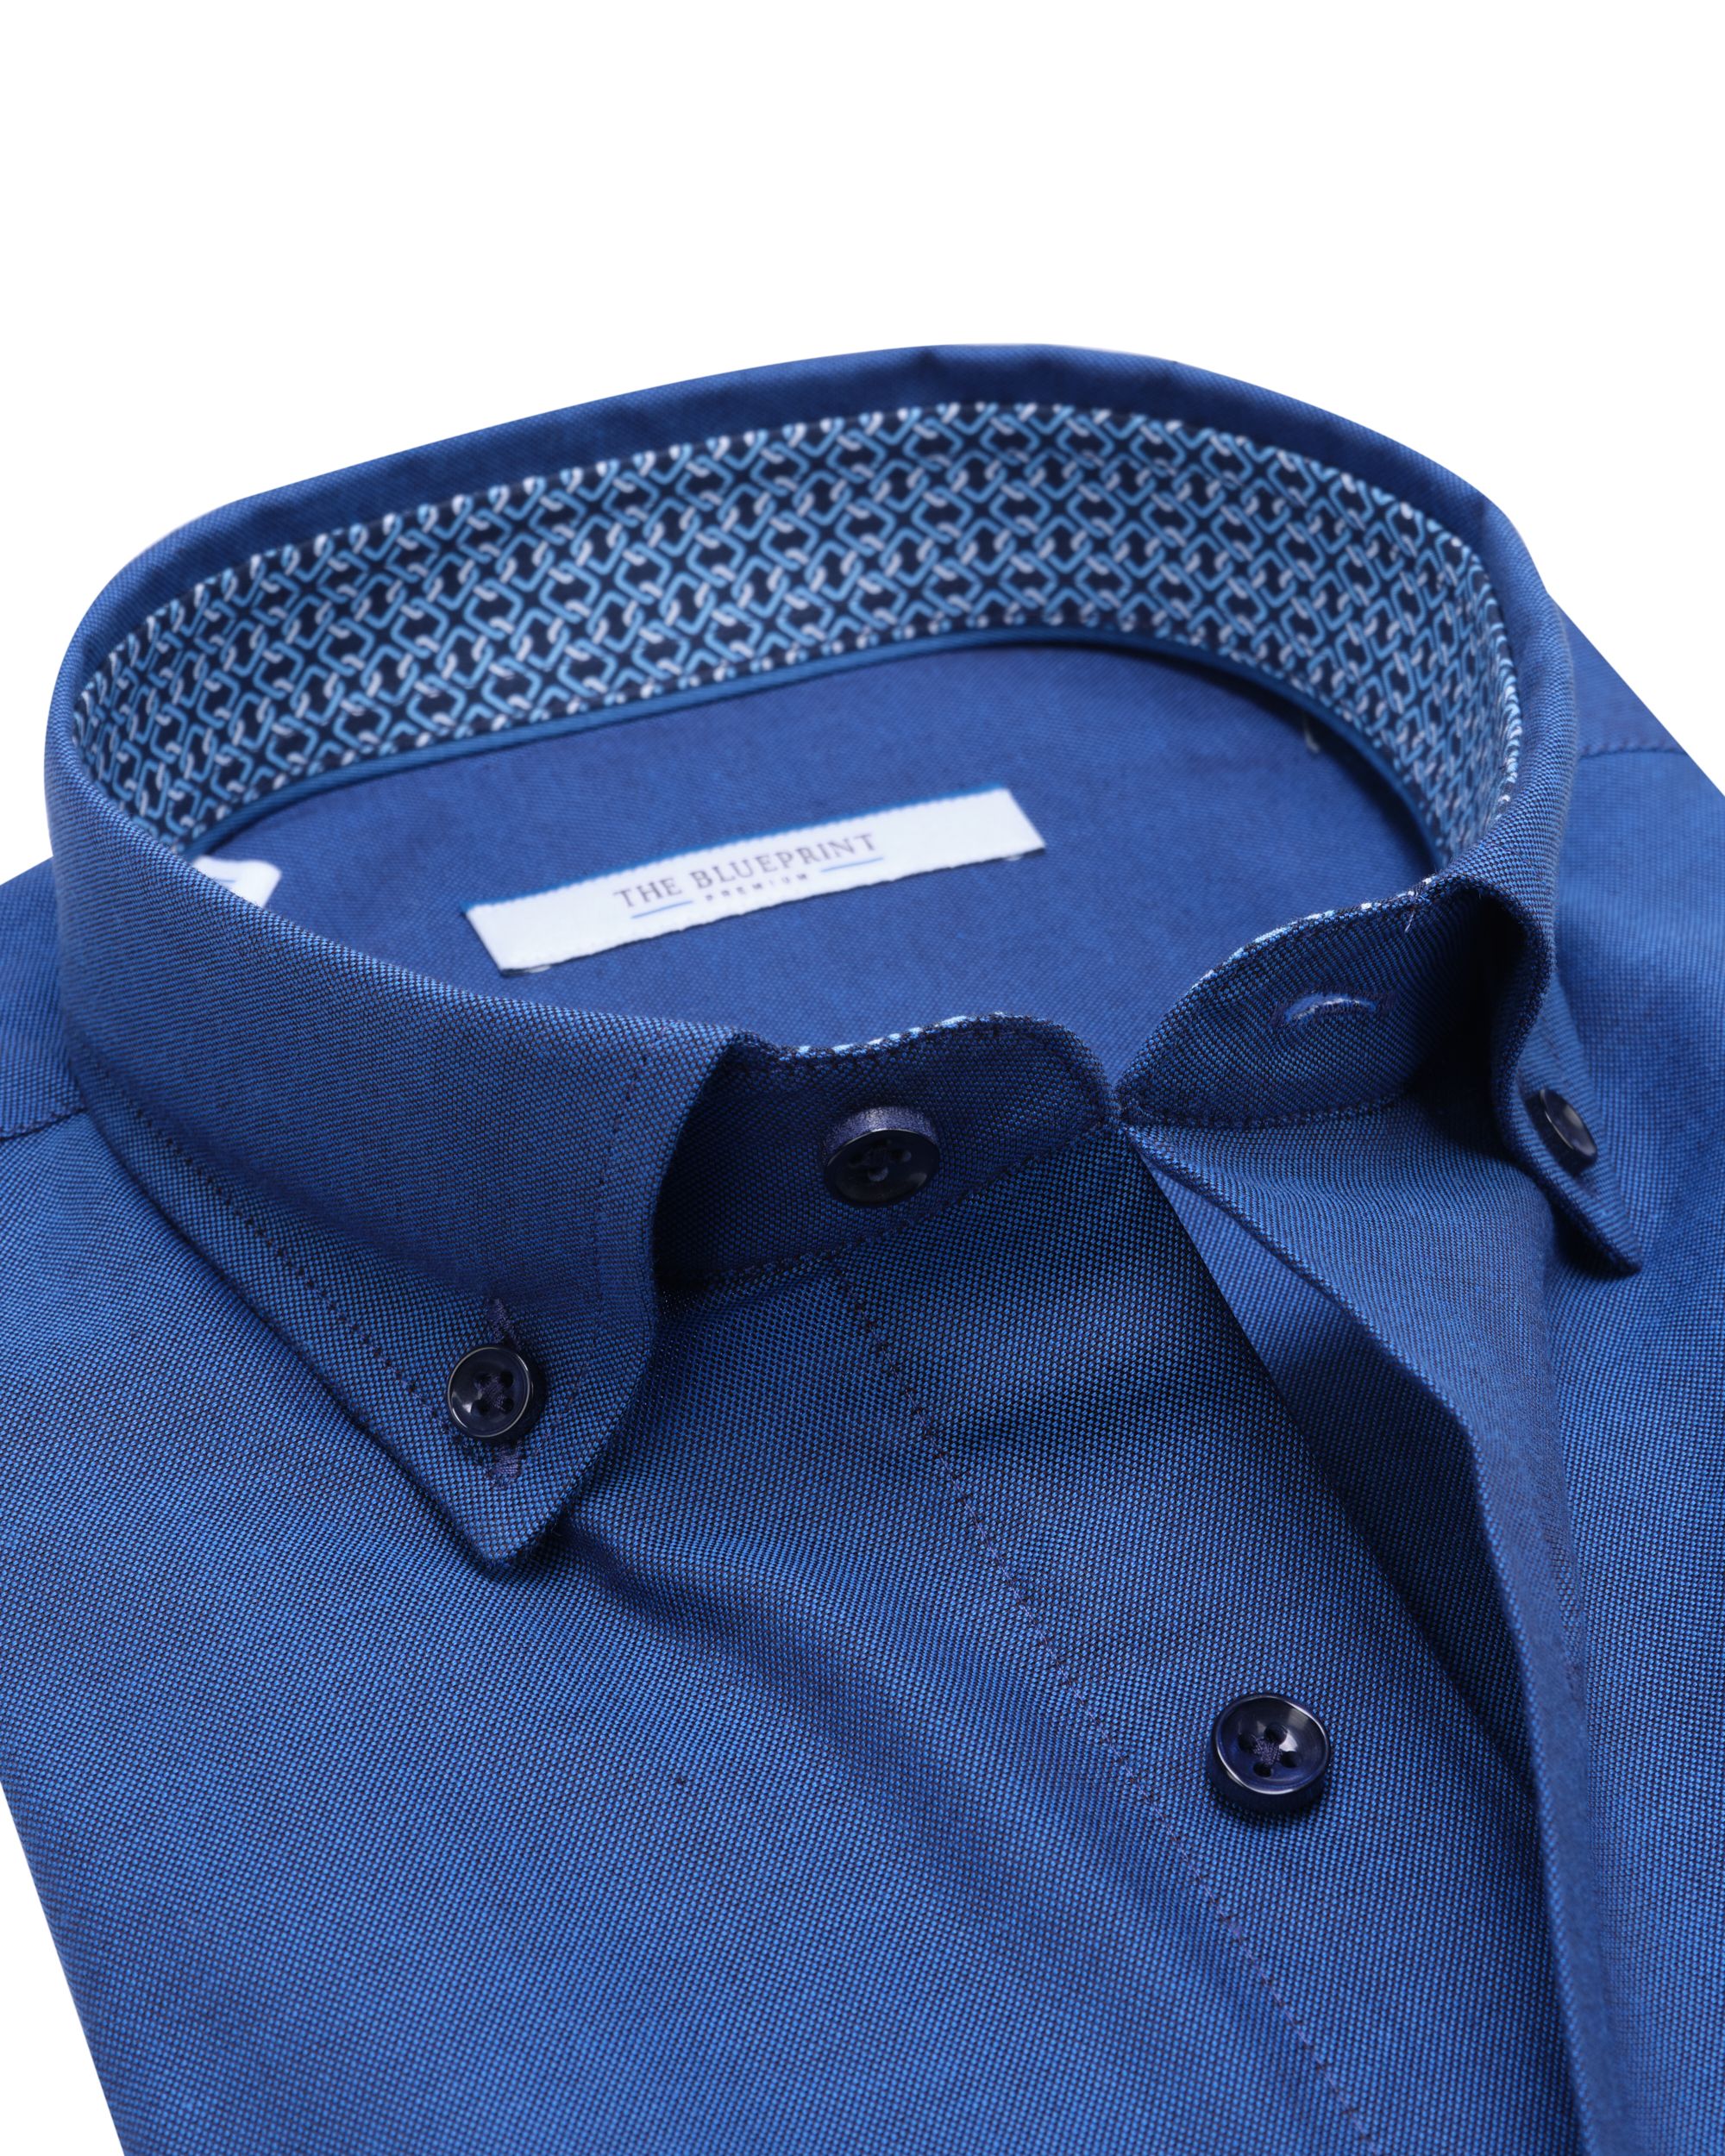 The BLUEPRINT Premium Casual Overhemd LM NAVY 082232-001-L